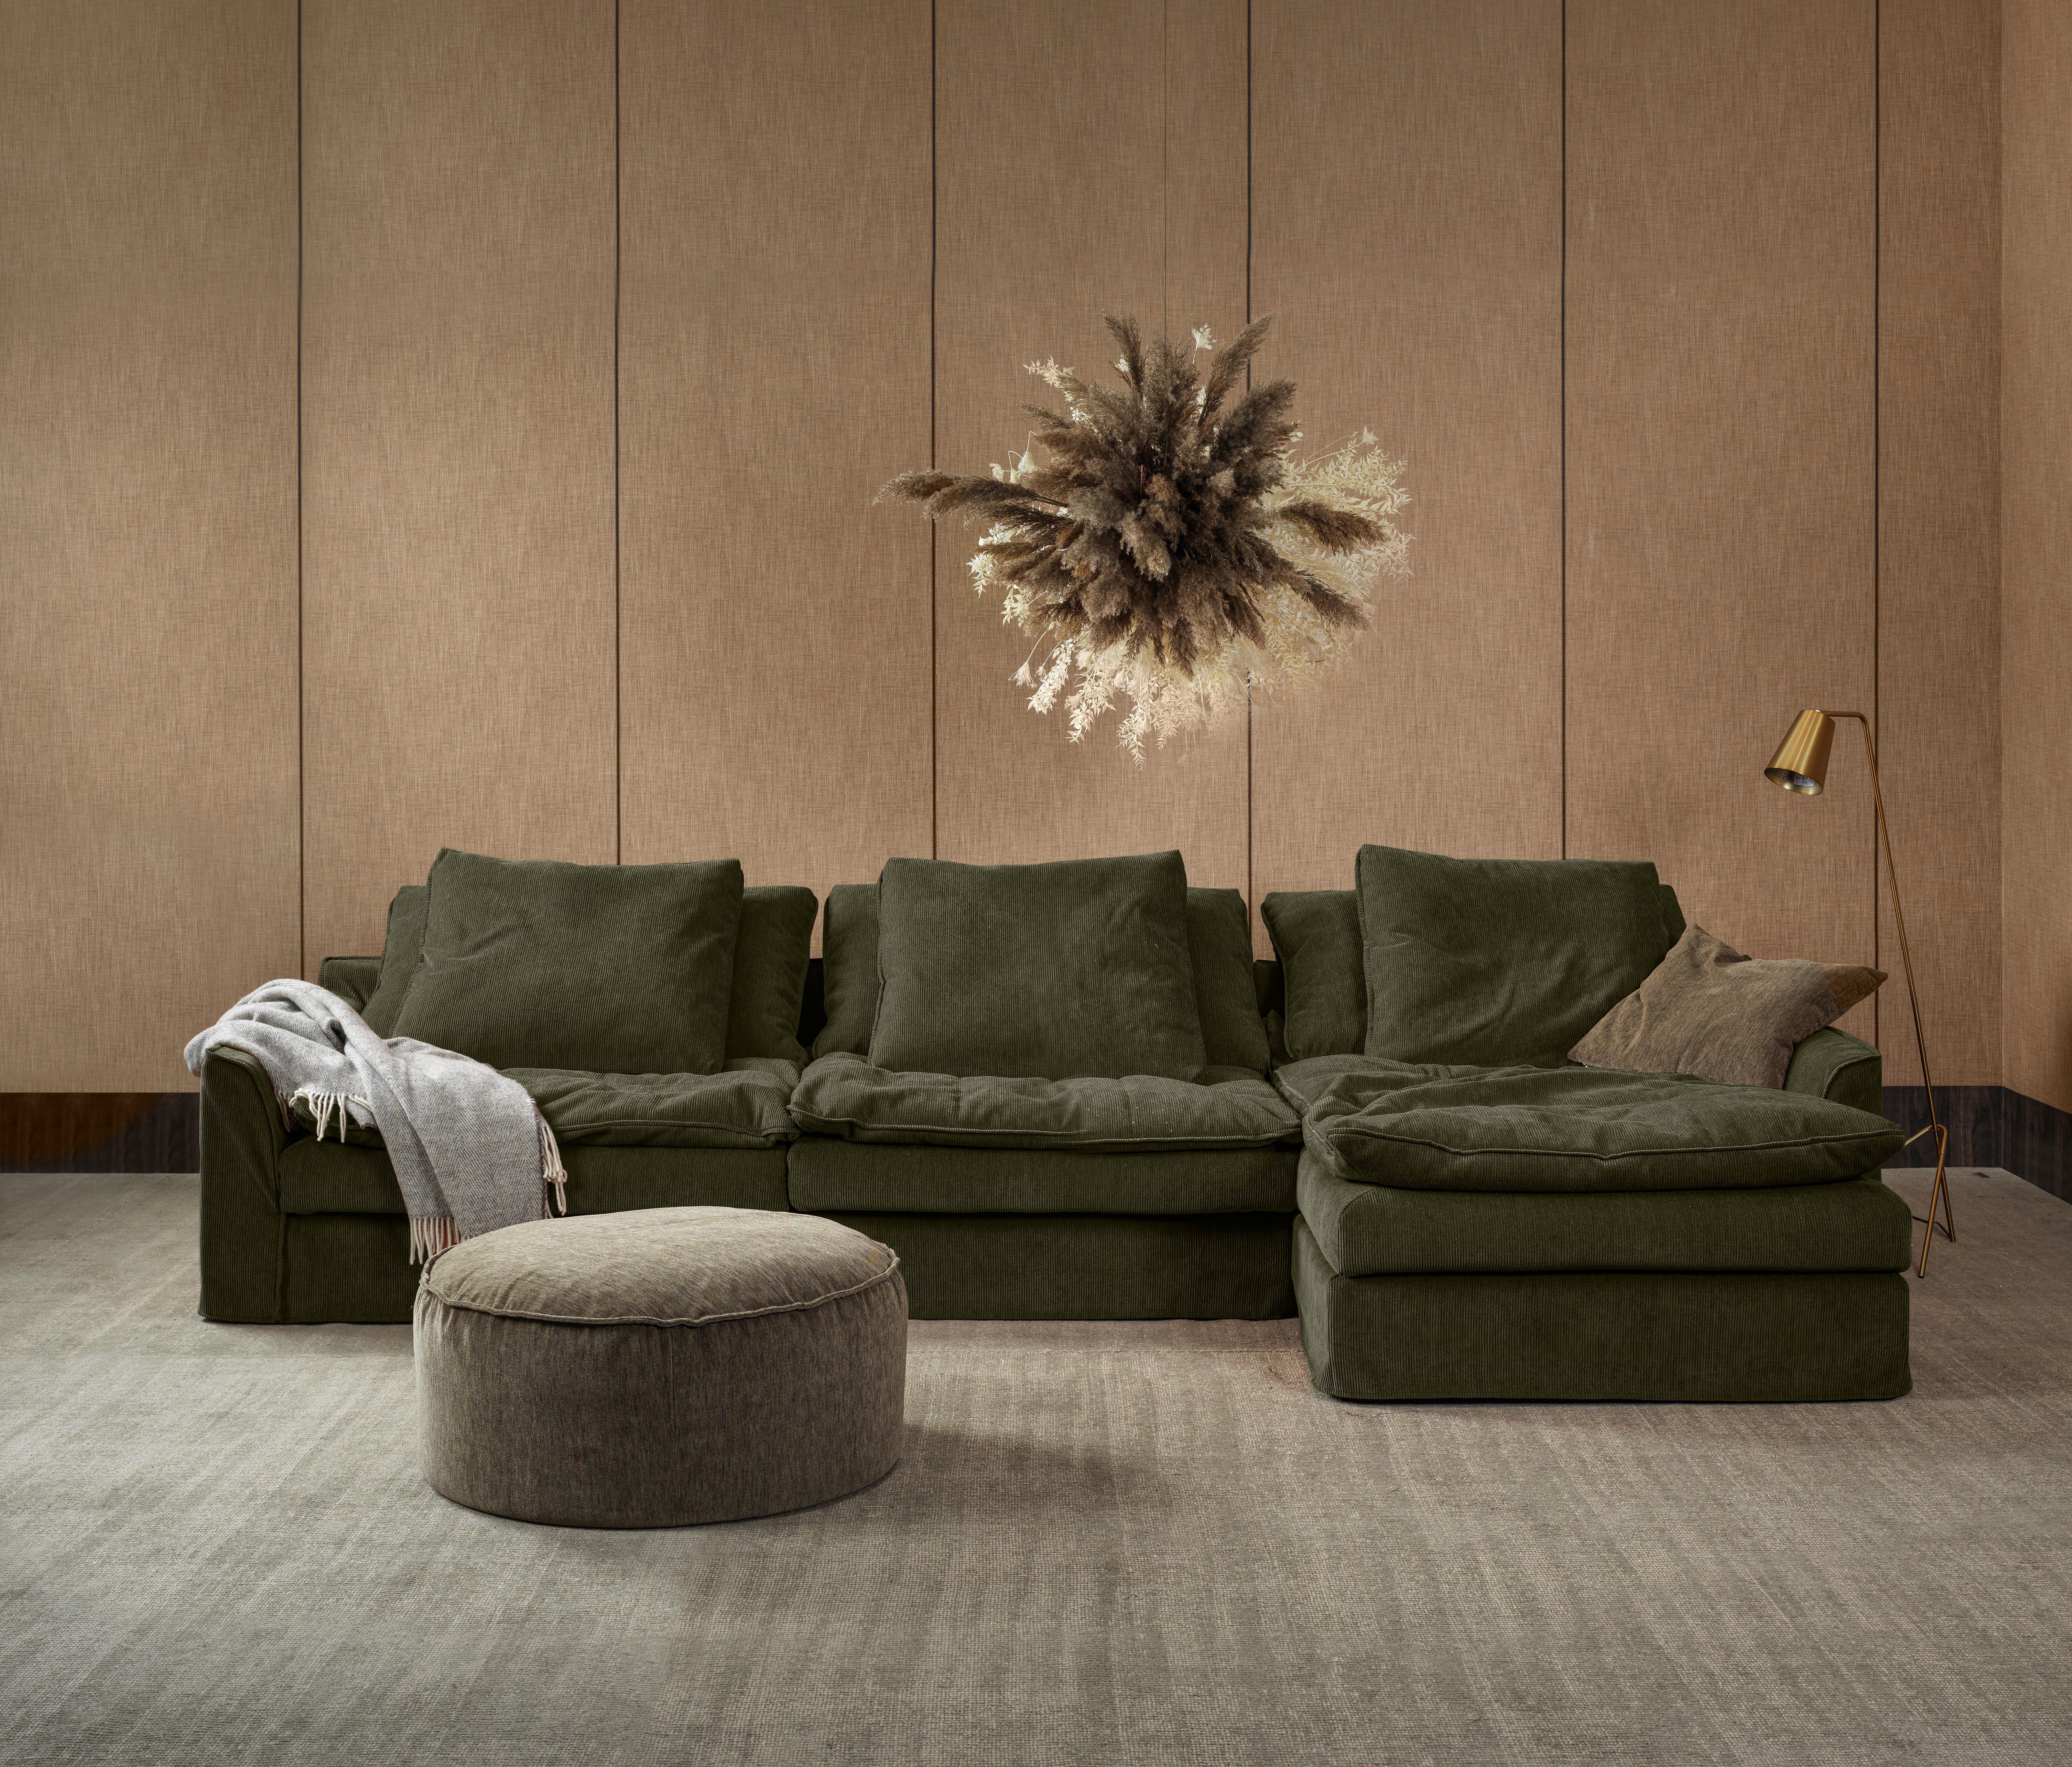 mit green Big-Sofa mit Federn Sake, abnehmbarer gefüllt 6 Hussenbezug, Kissen, furninova Kissen